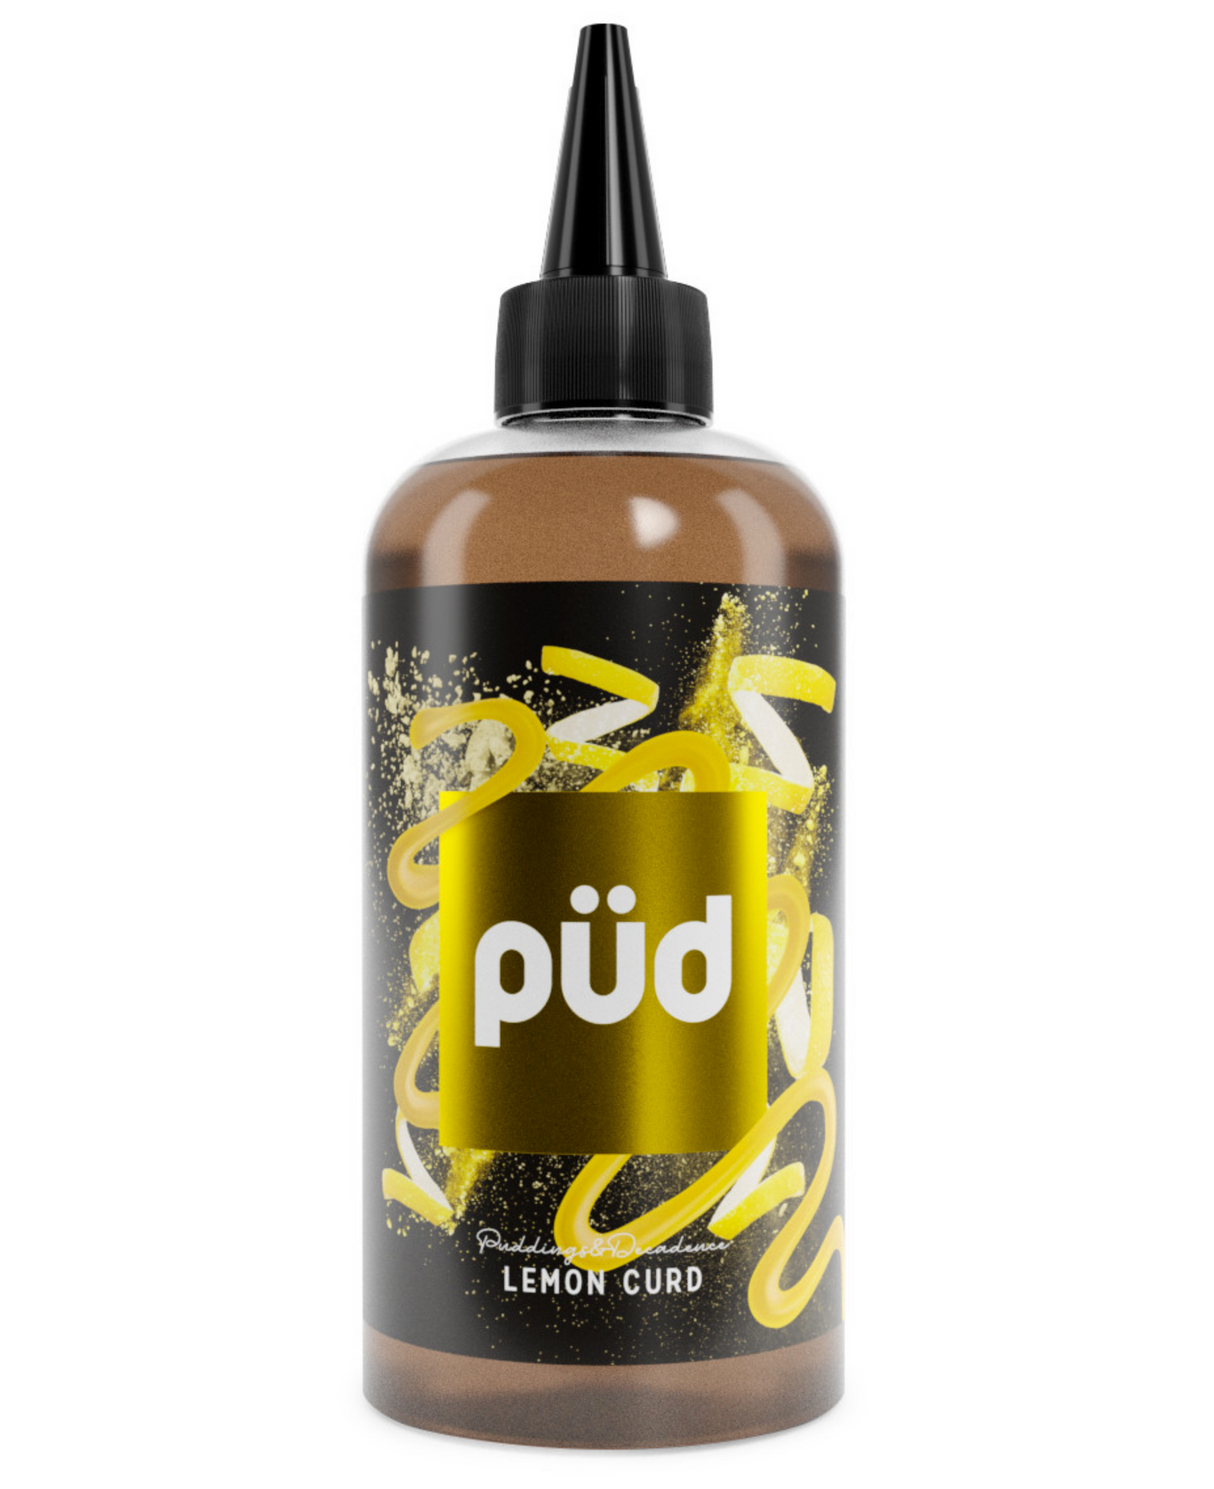 PUD - Pudding & Decadence - Lemon Curd - 0mg - 200ml - My Vape Store